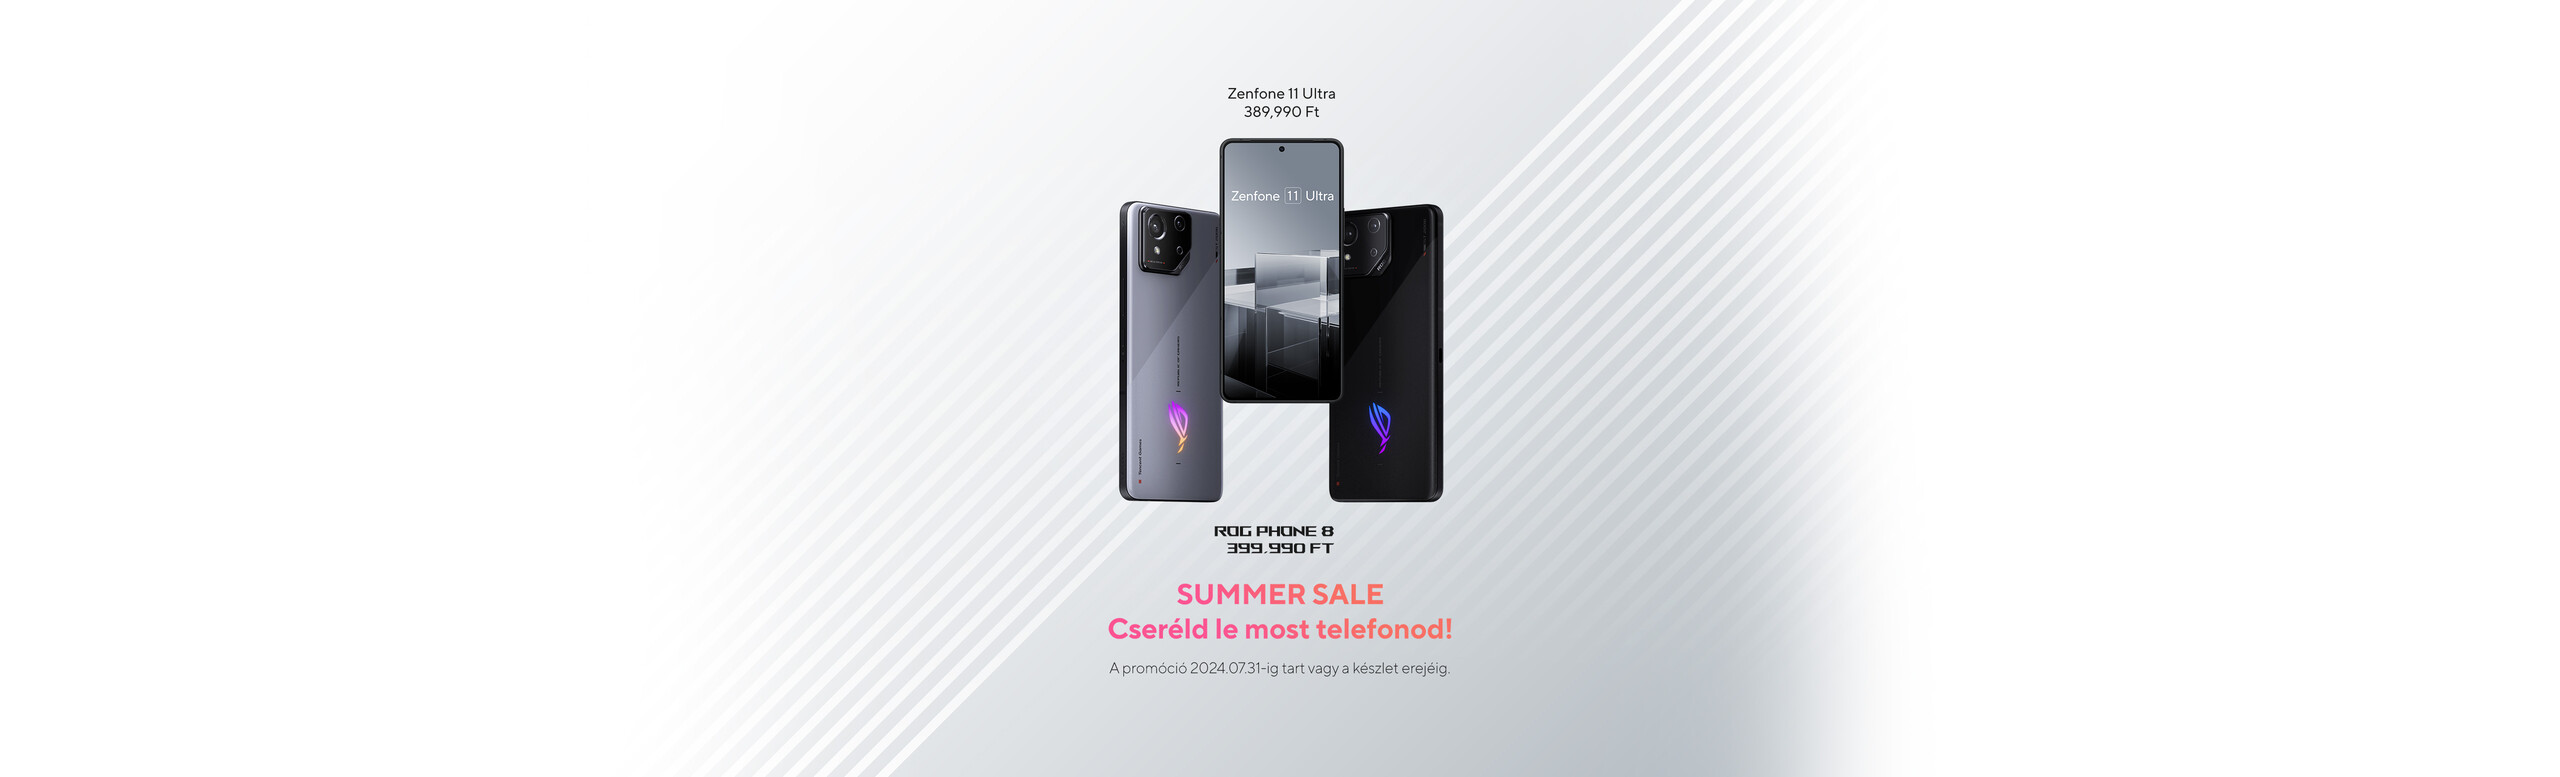 Asus Summer Phone Promo 2024